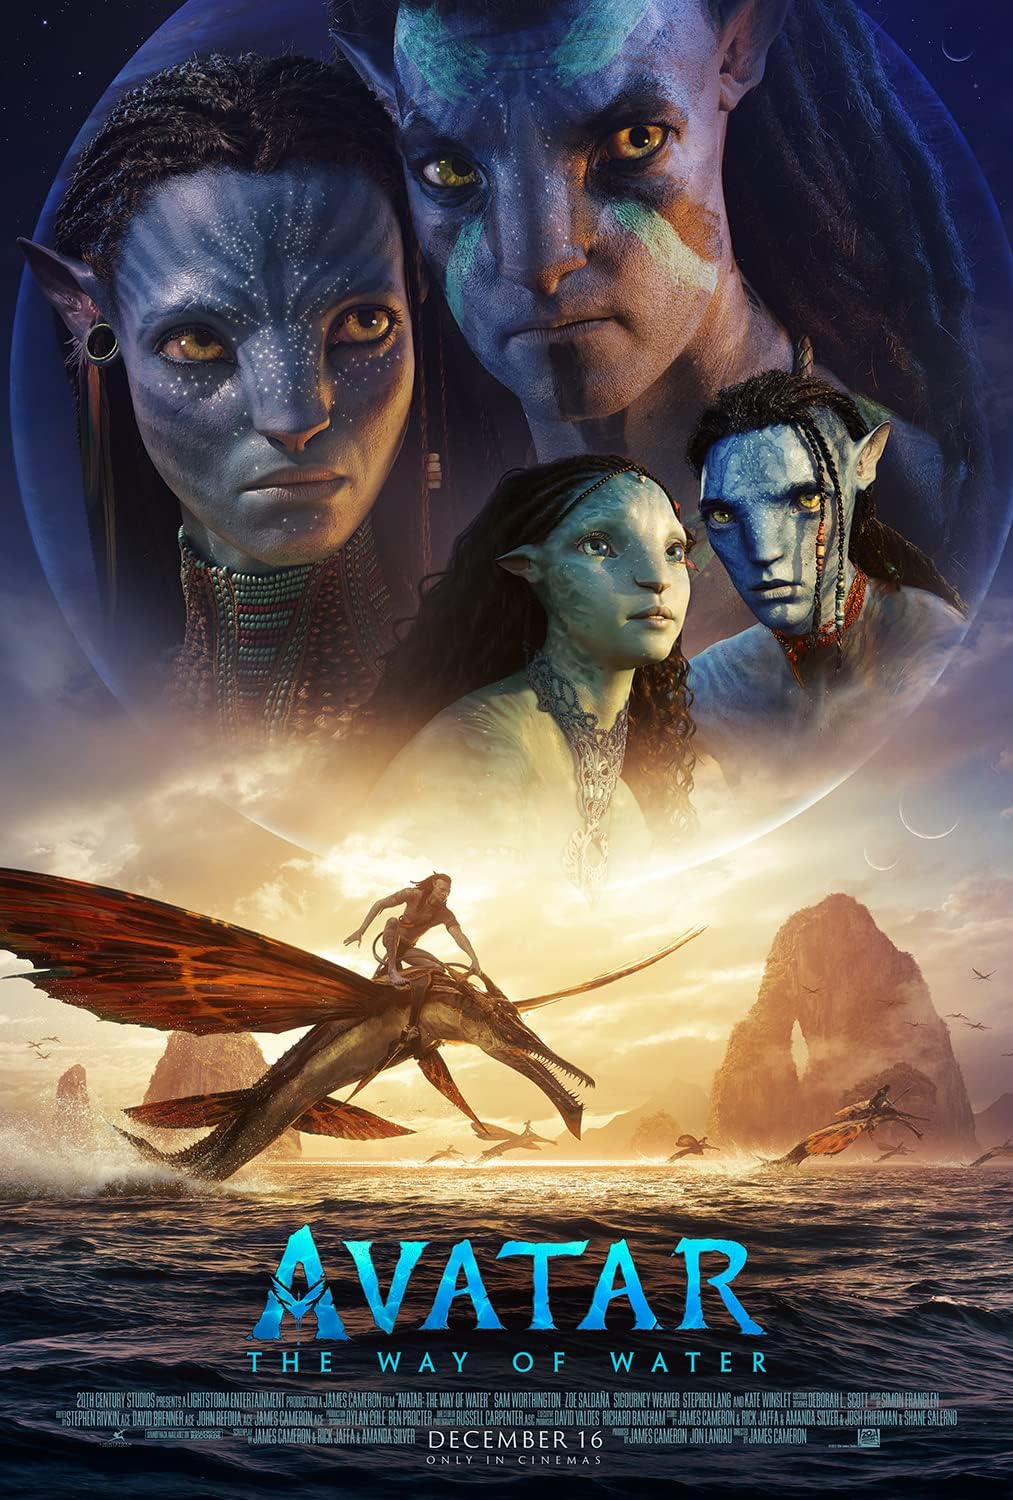 WEB-DL 2160p | Avatar: The Way of Water 2022 -- Seeders: 1 -- Leechers: 0